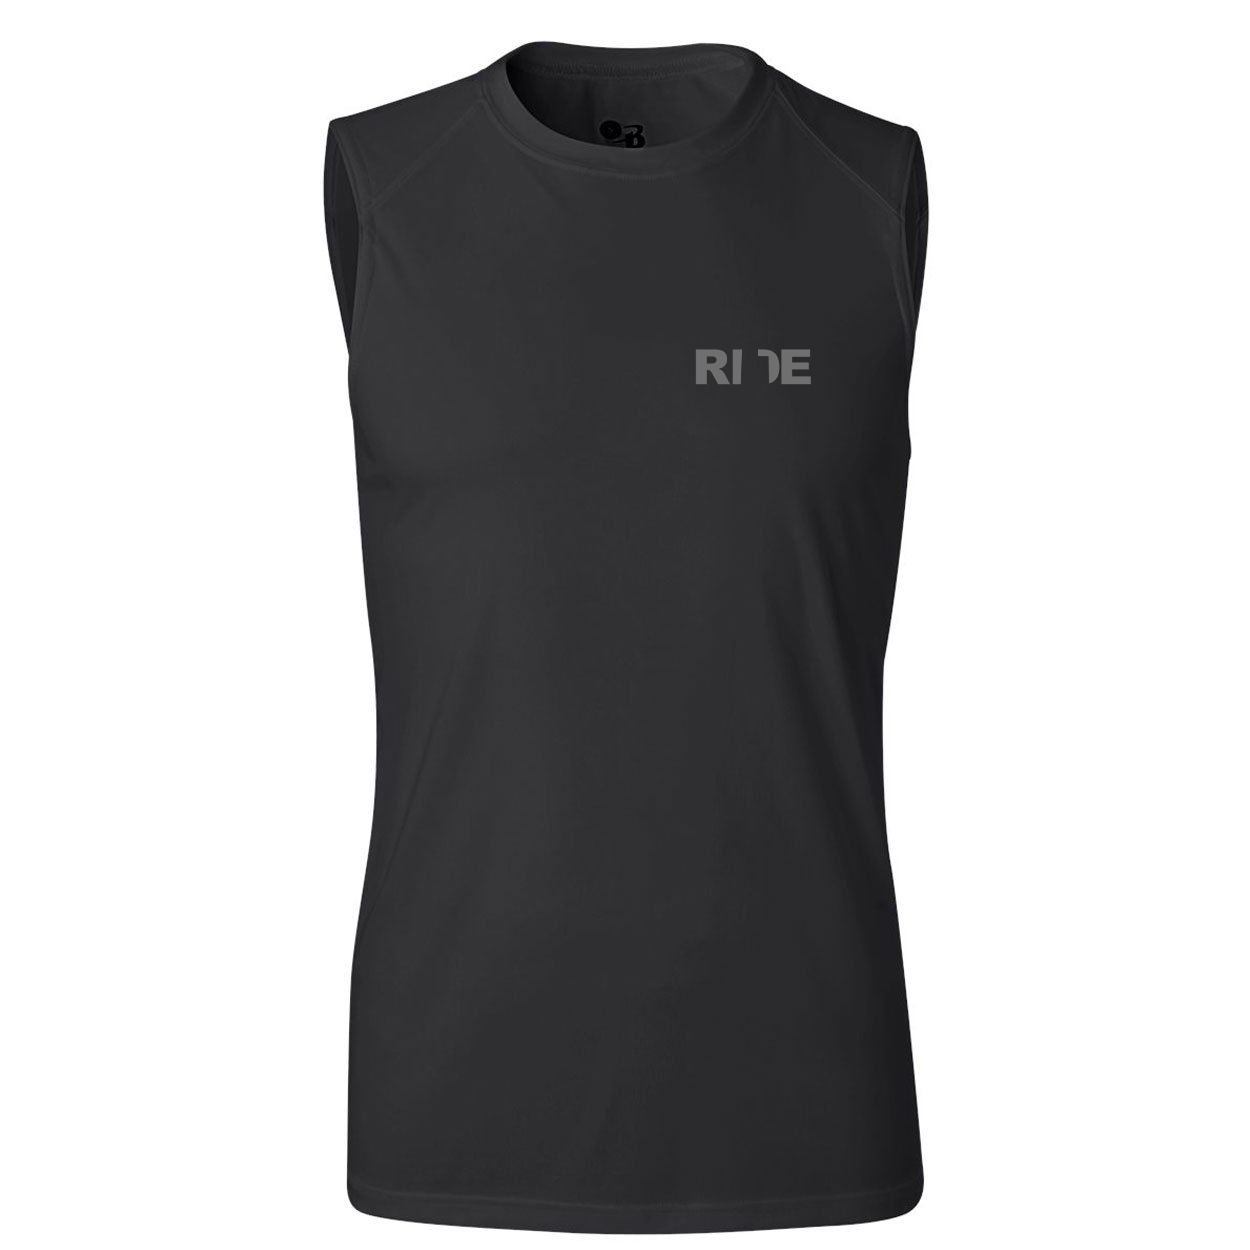 Ride Utah Night Out Unisex Performance Sleeveless T-Shirt Black (Gray Logo)